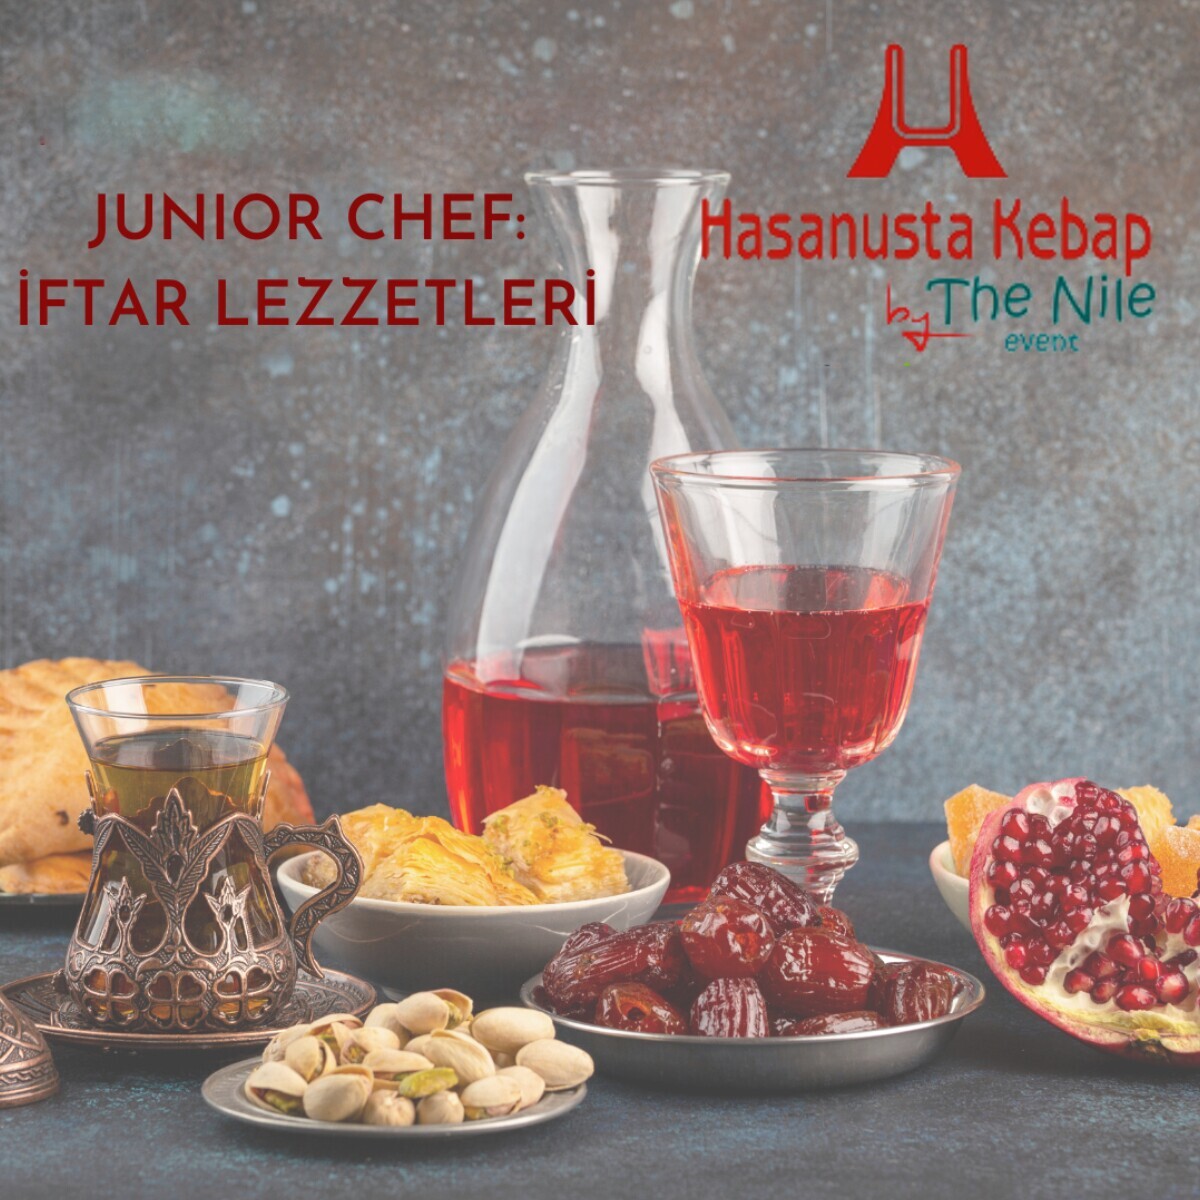 27 Mart Pazar 5-12 Yaş Grubu Junior Chef: İftar Lezzetleri Atölyesi